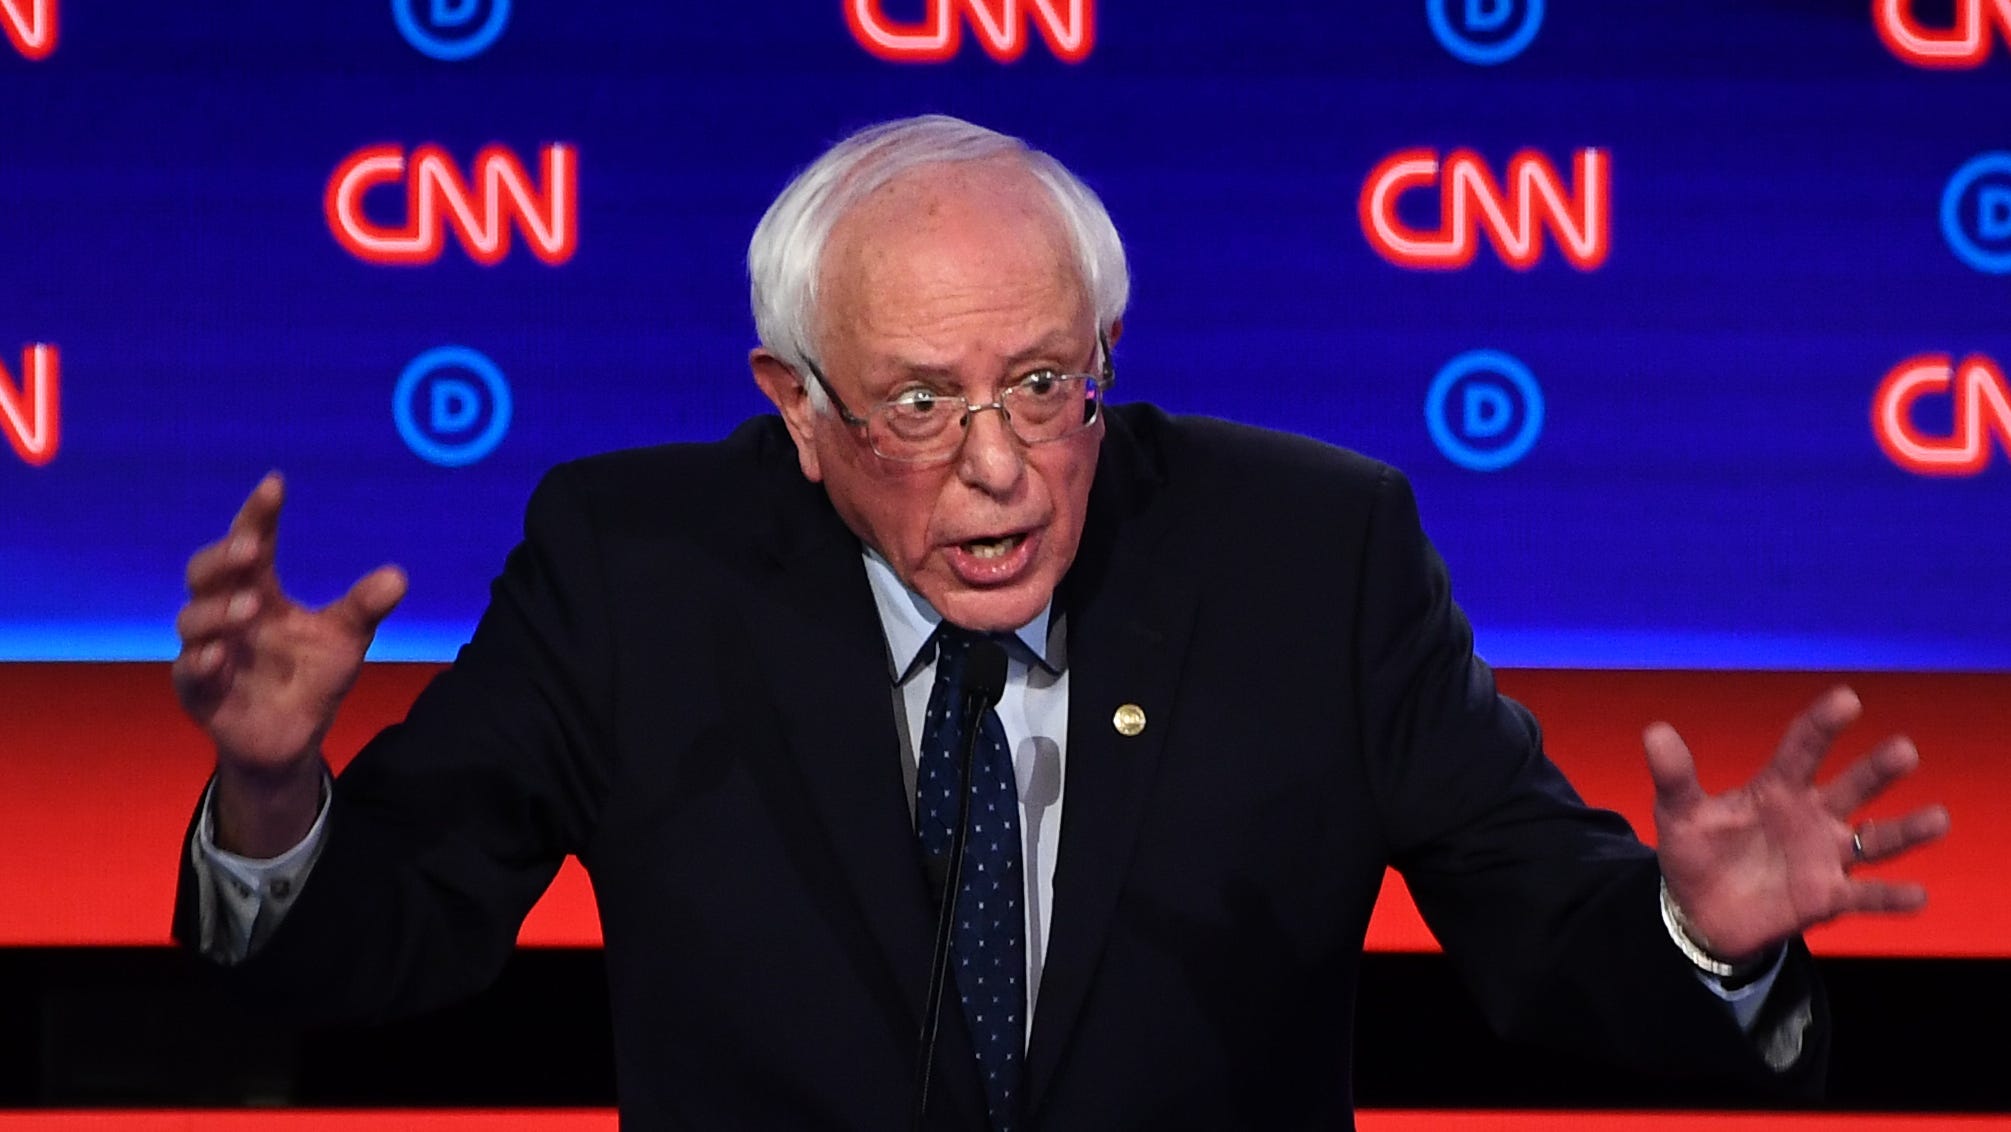 Democratic debate: Bernie Sanders calls out CNN moderator Jake Tapper